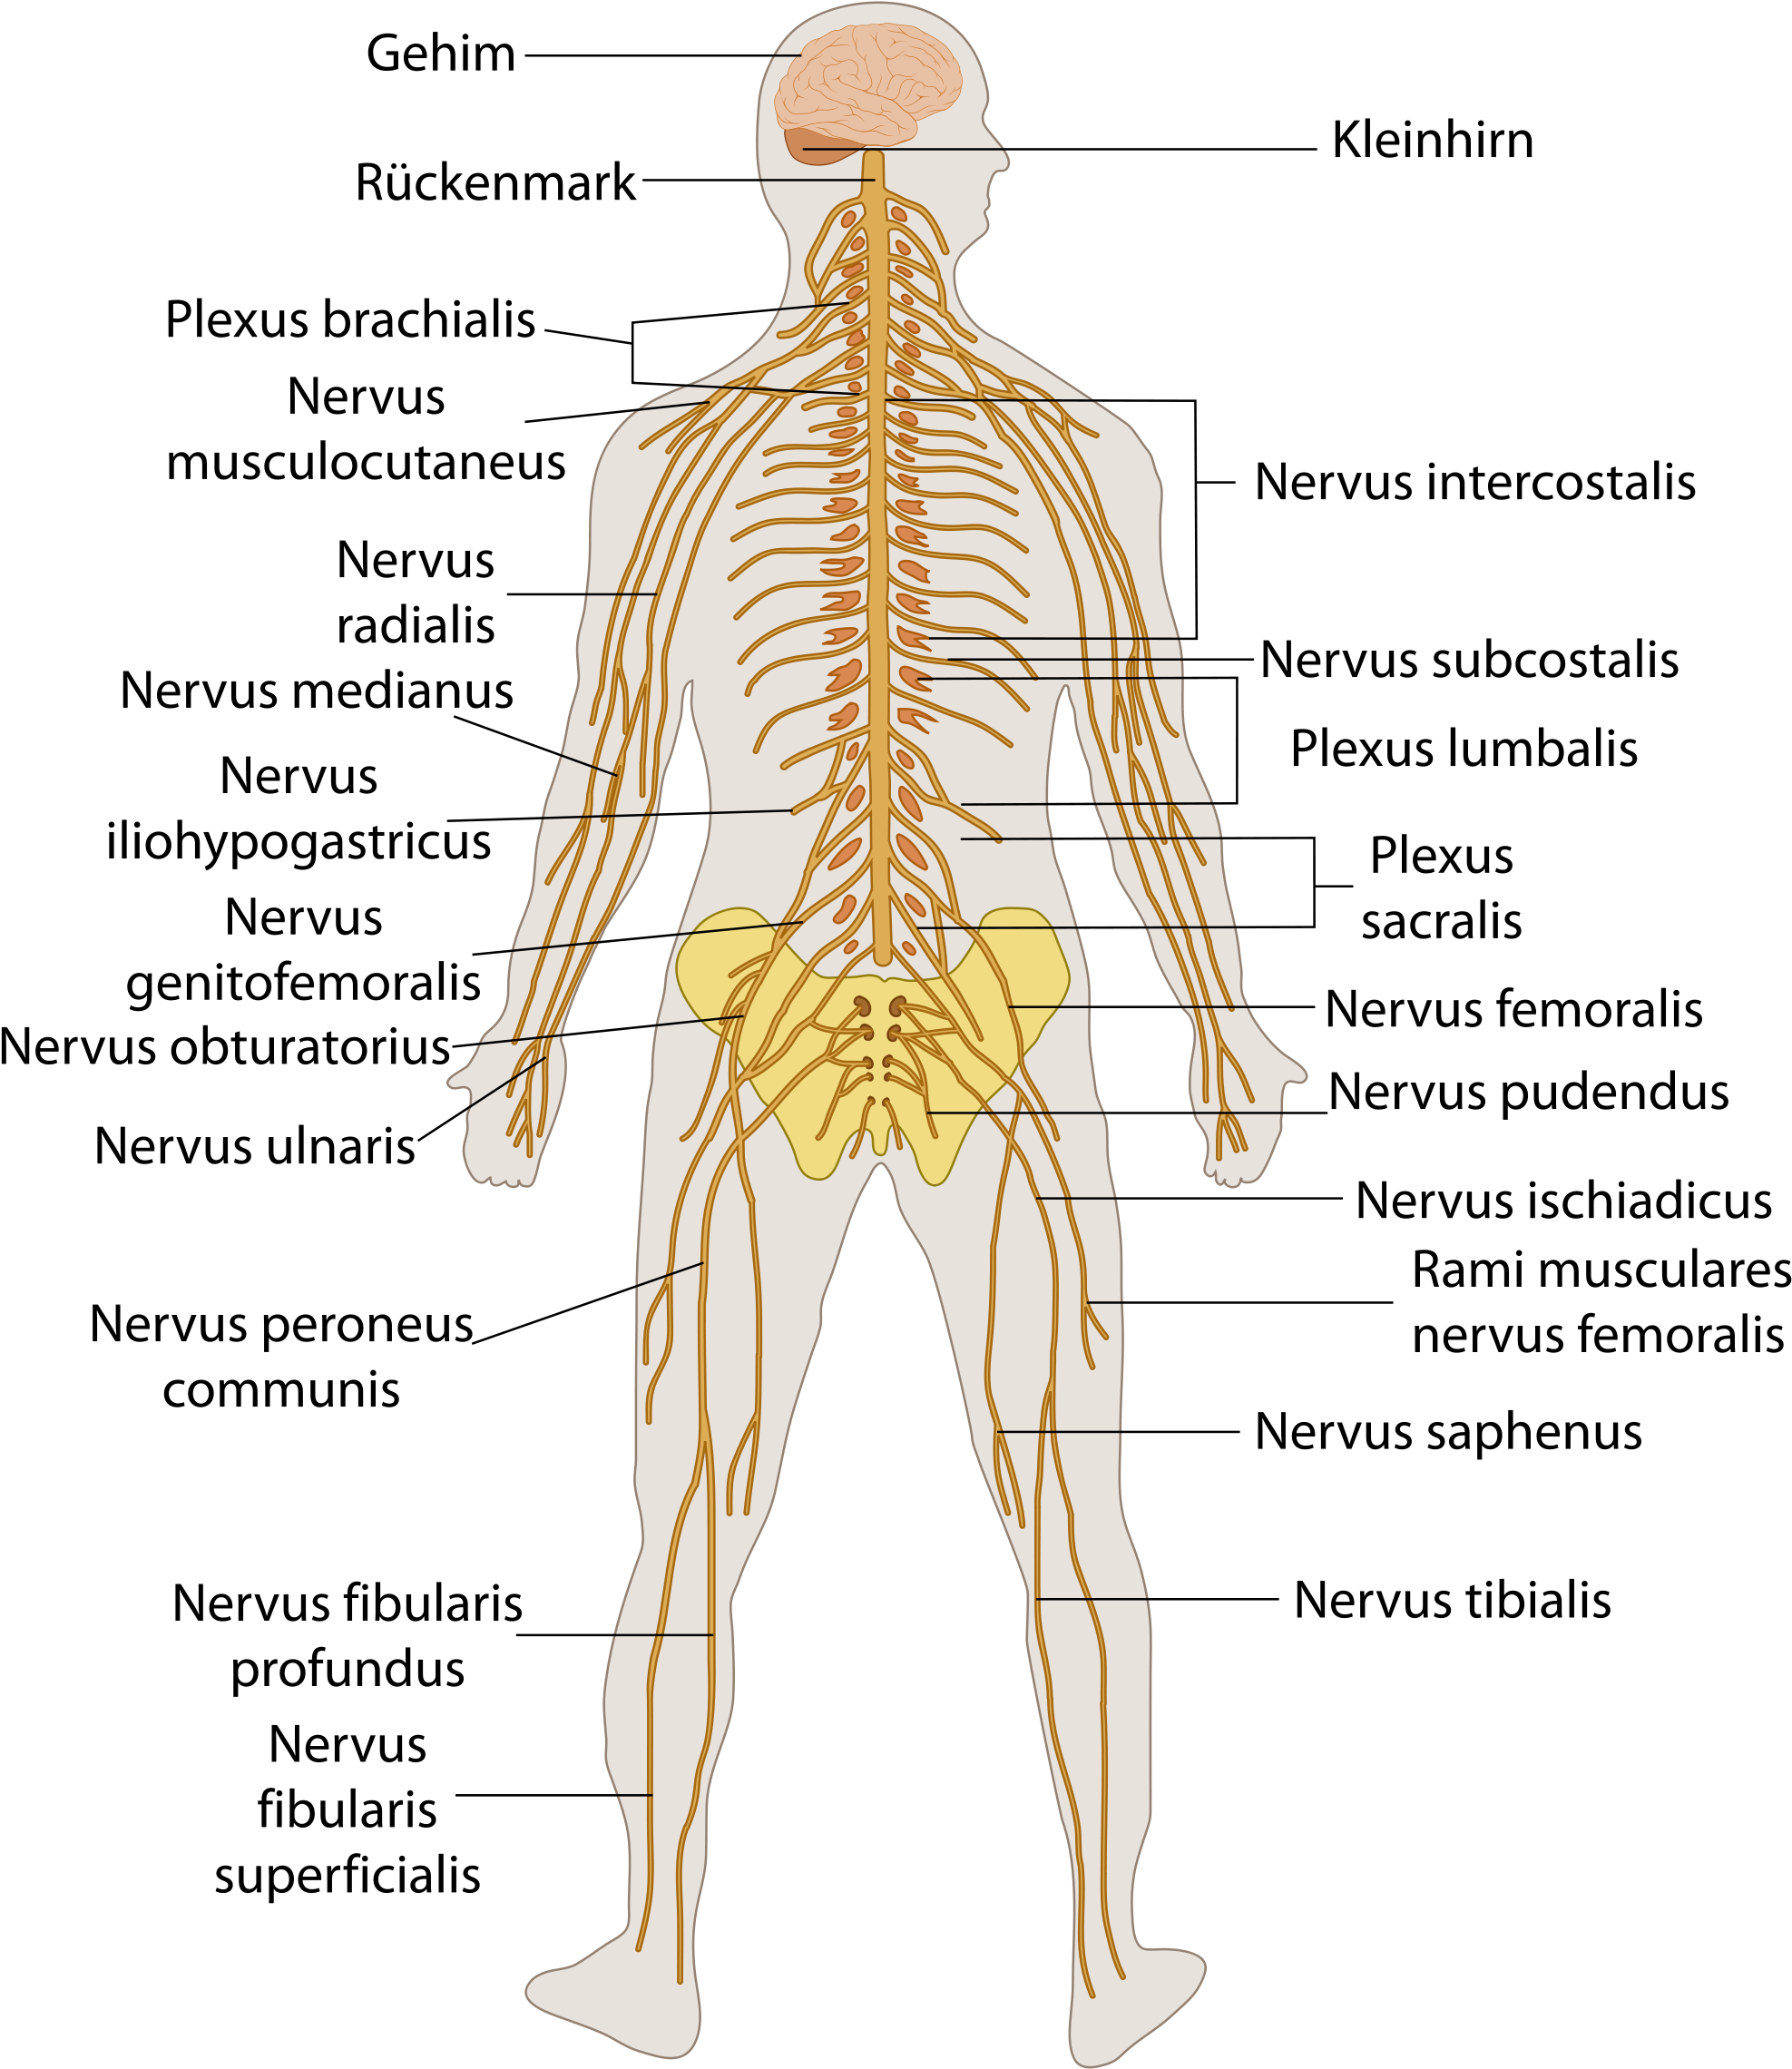 Nervous System Diagram / Nervous System Graph Diagram The central